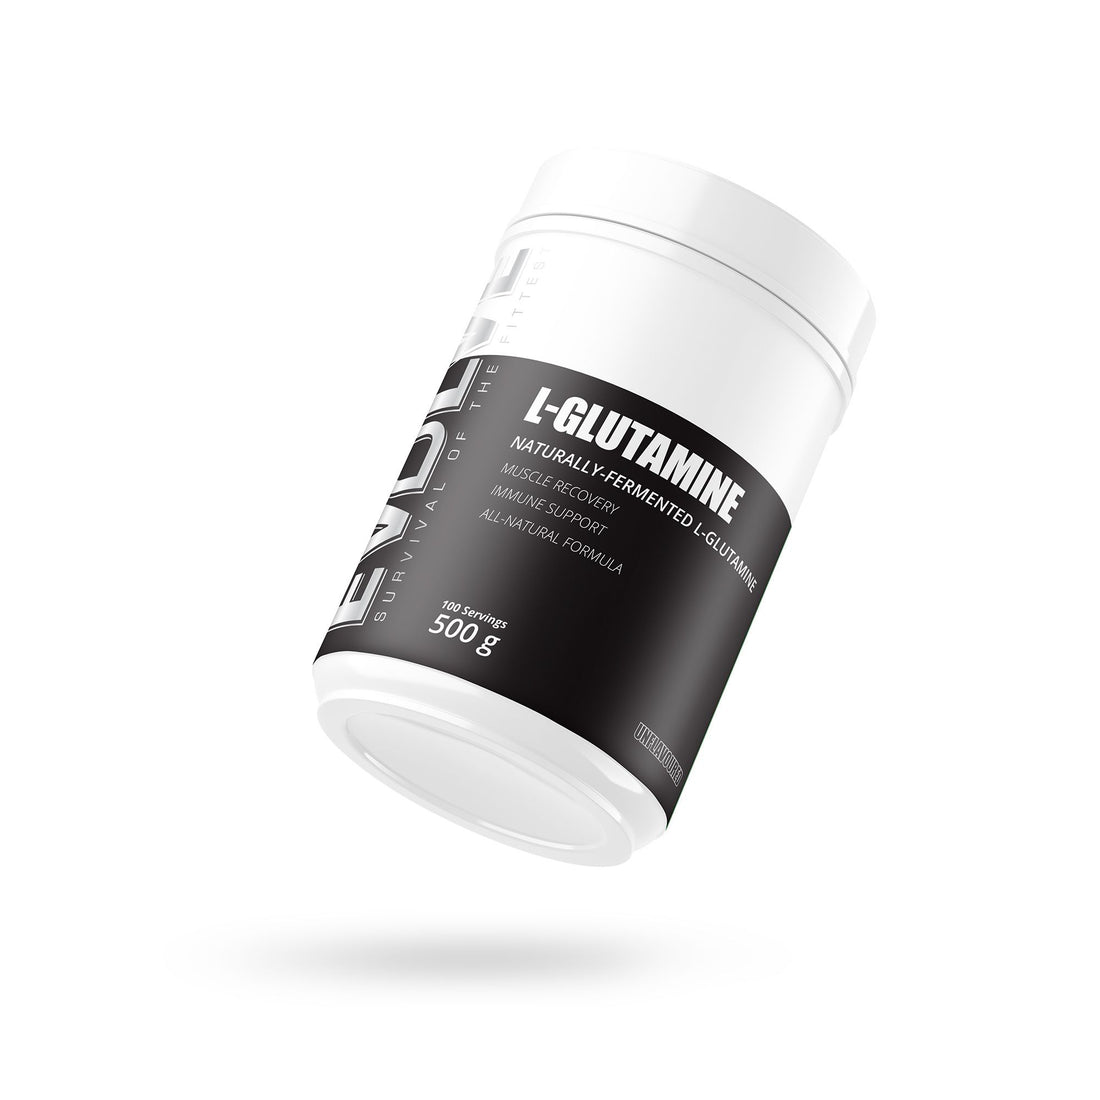 Evolve L-Glutamine - 500g